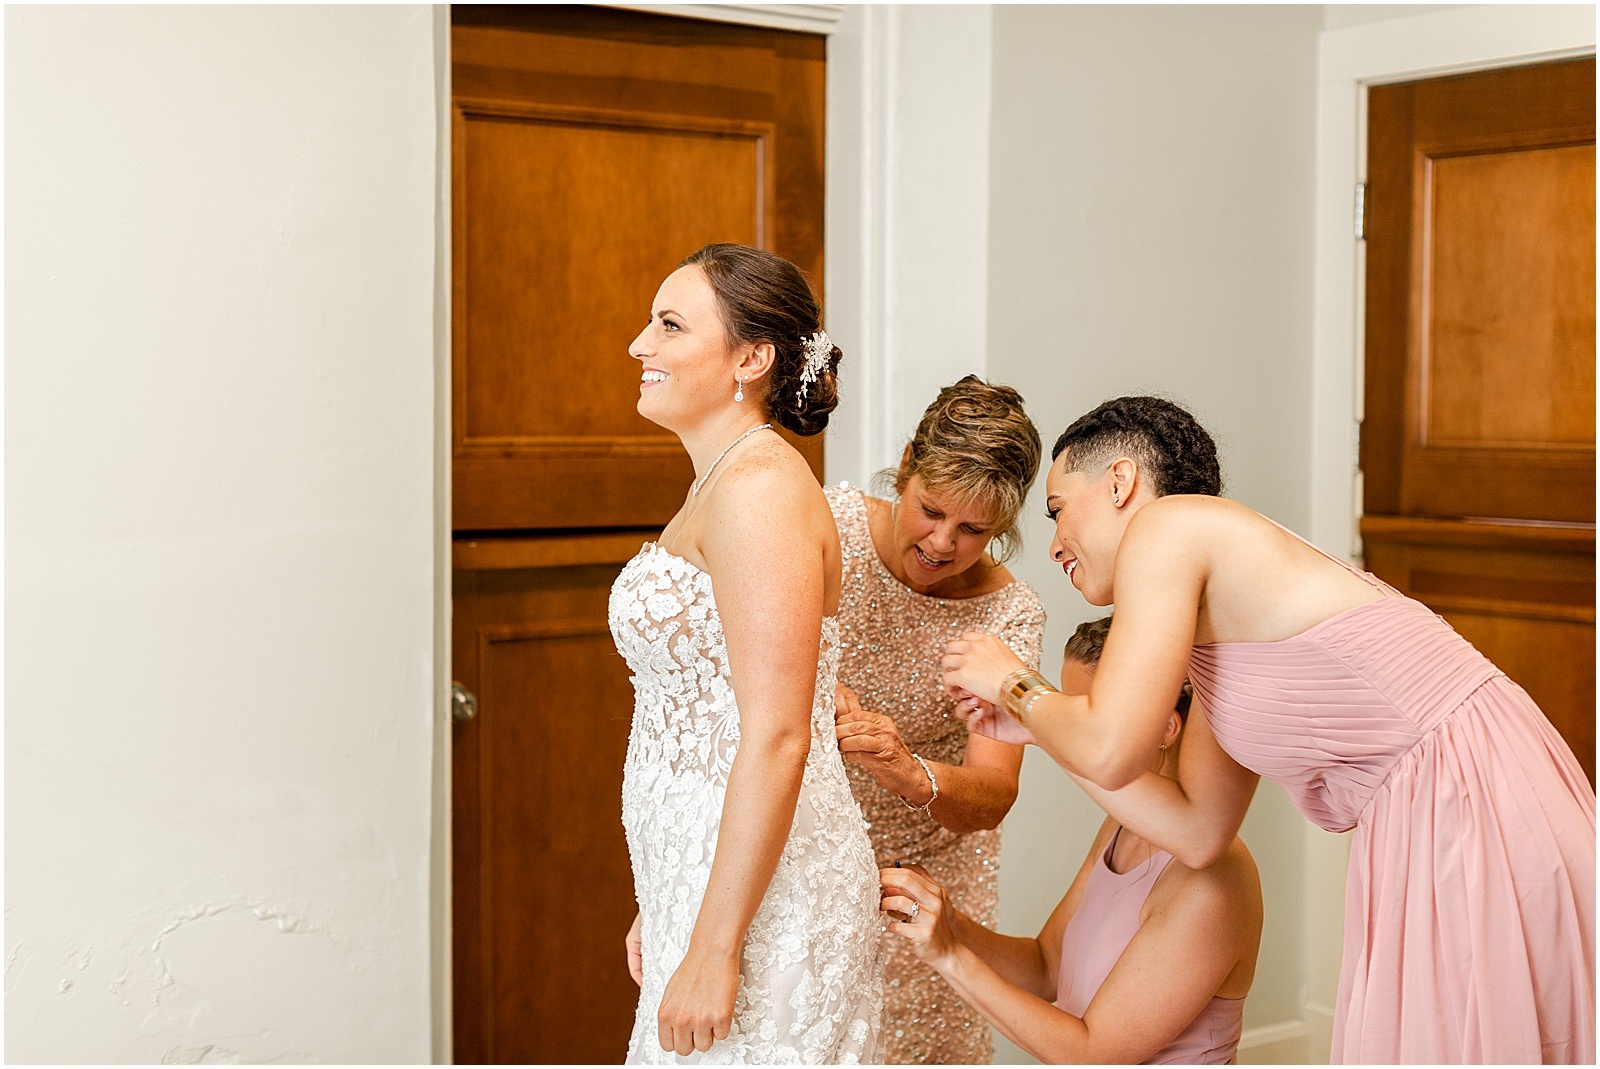 Deidra and Andrew | A Huntingburgh Indiana Wedding Bret and Brandie | Evansville Photographers | @bretandbrandie-0006.jpg